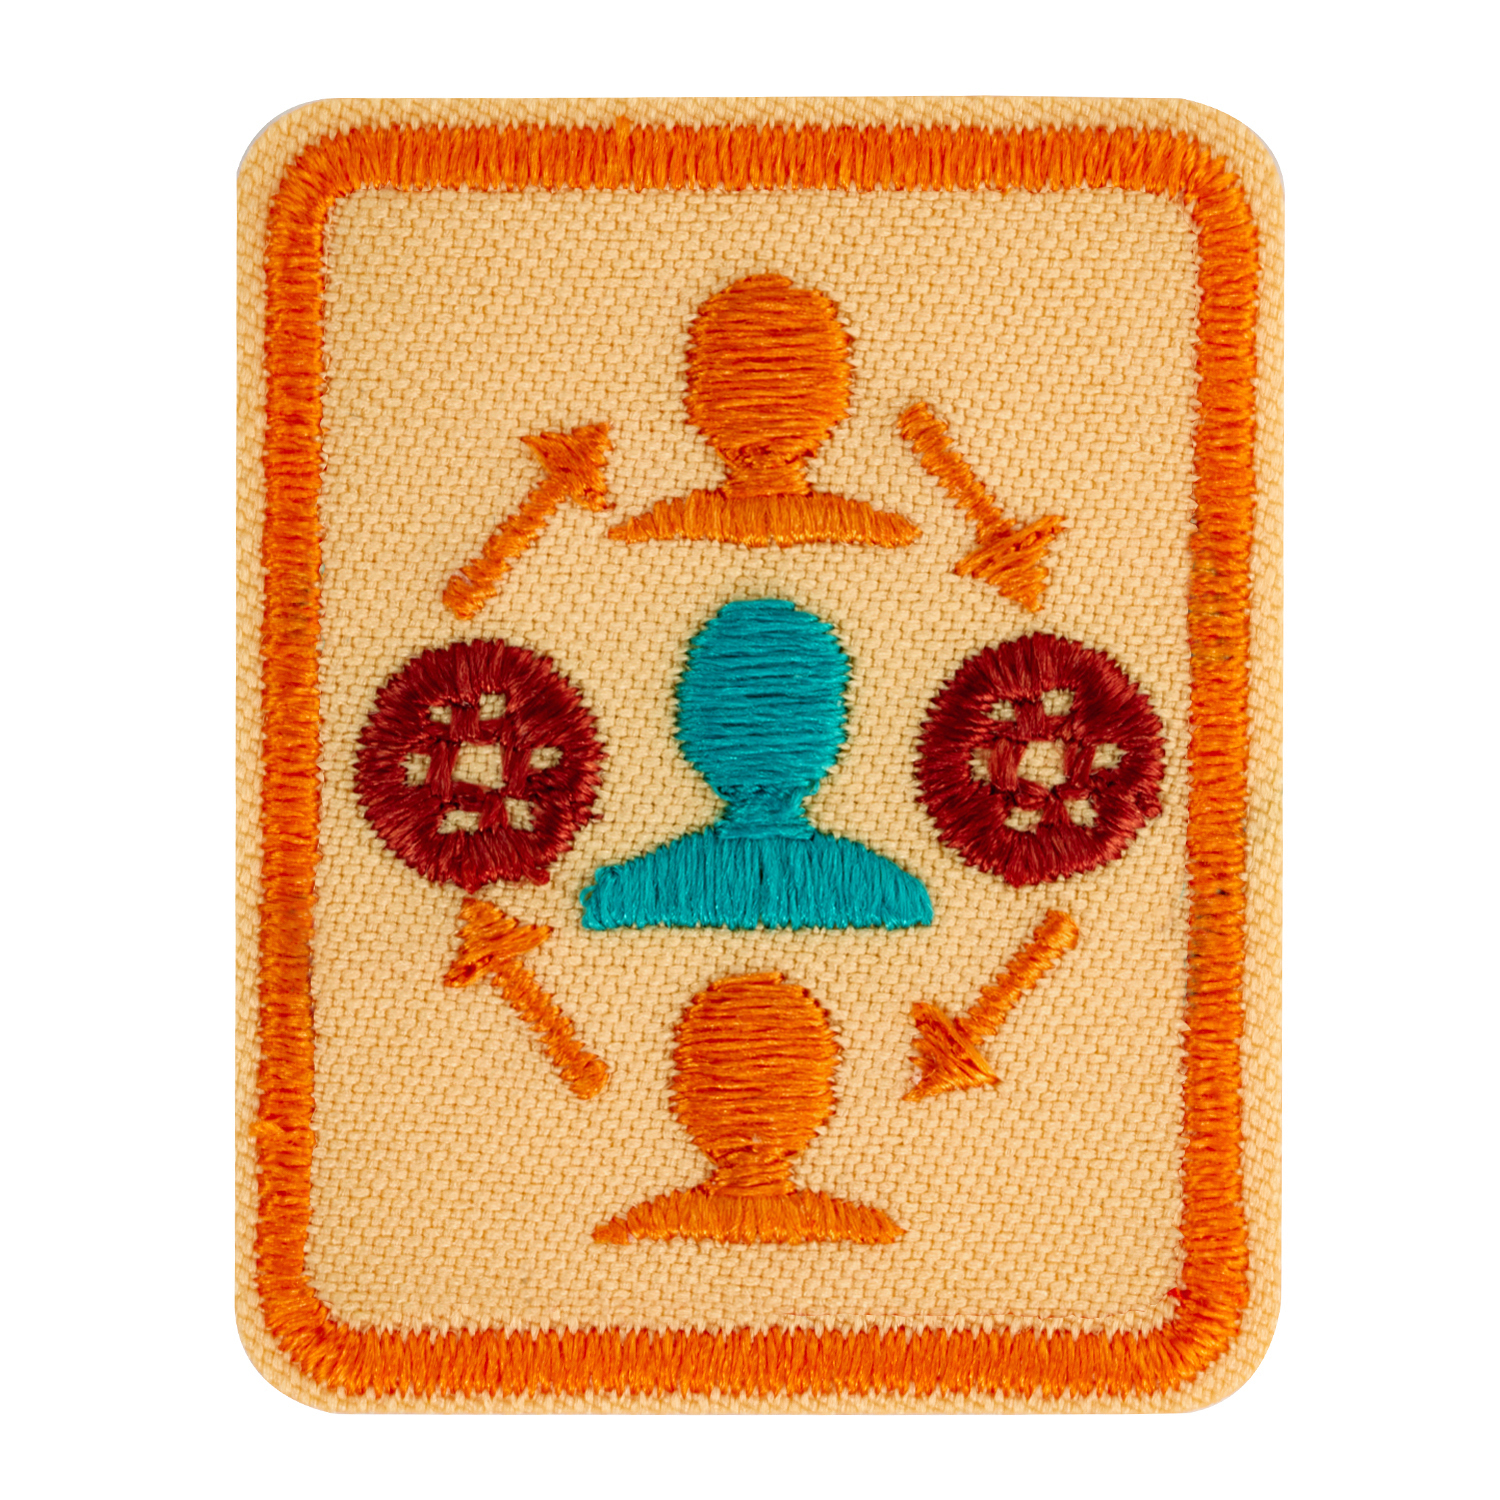 My Cookie Network Senior Badge